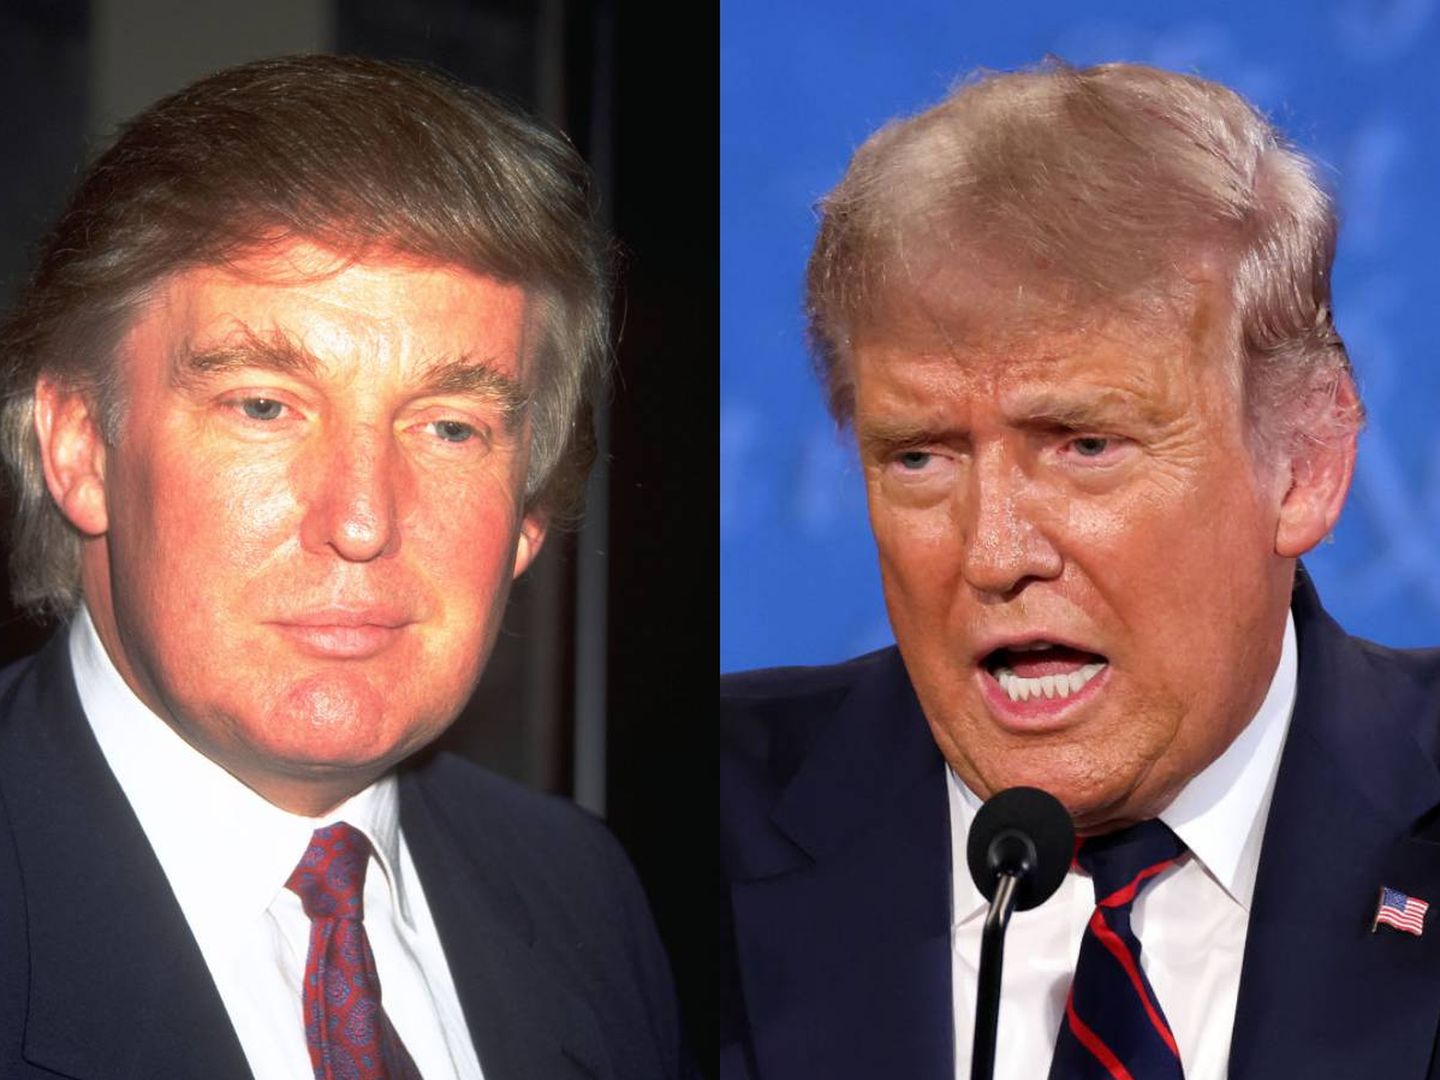 Donald Trump en 1999 versus Donald Trump en 2020. (Getty)